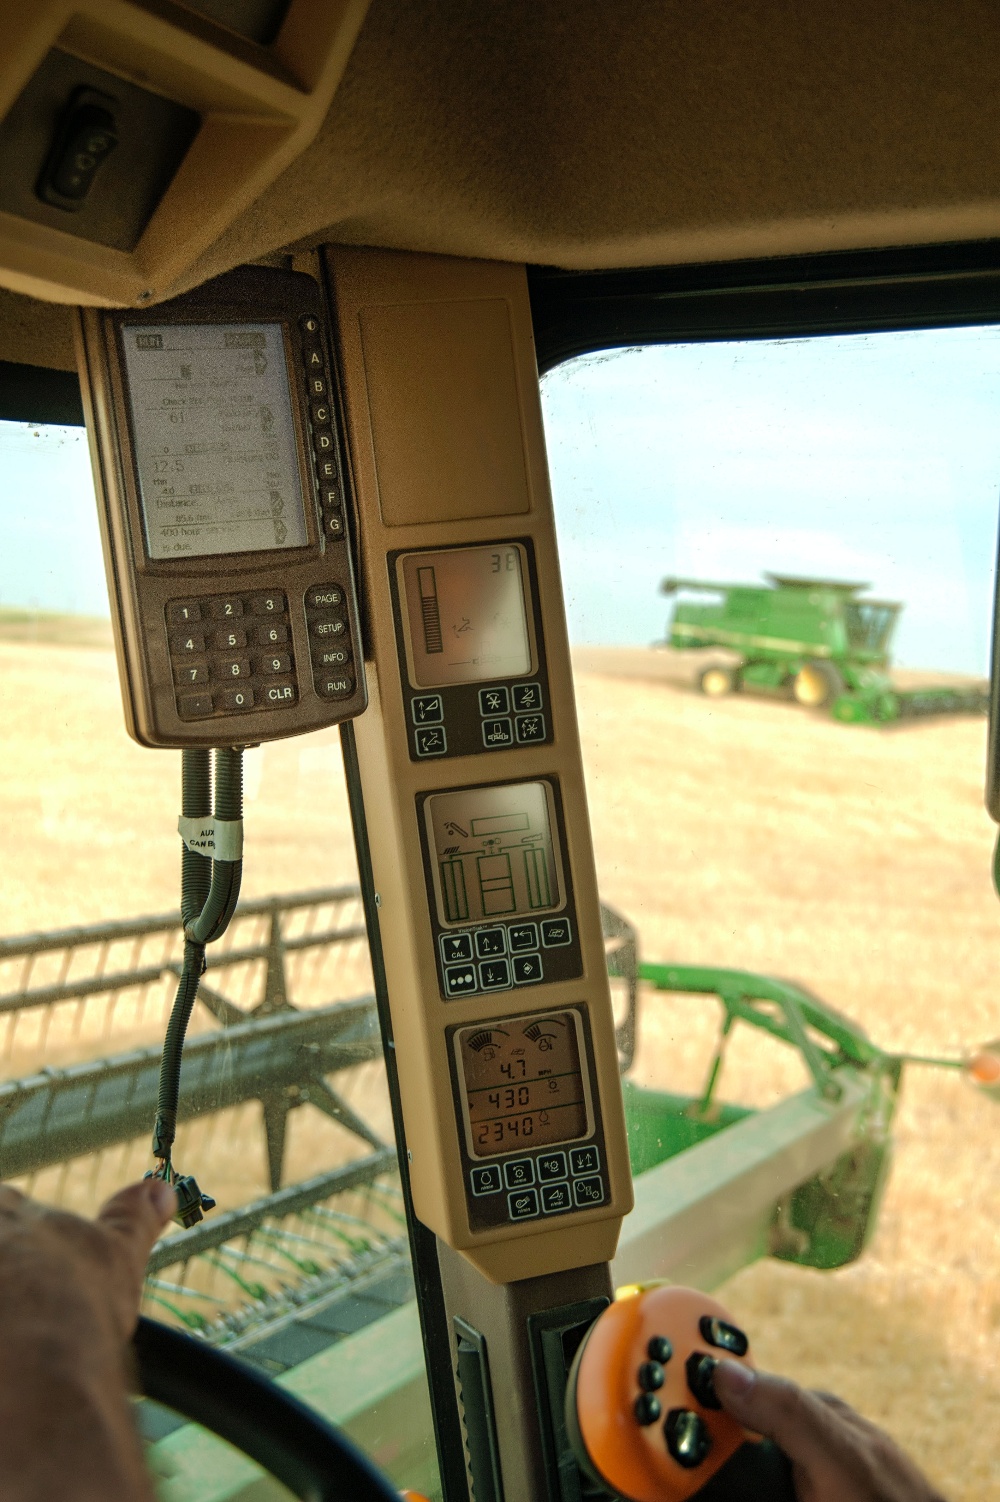 Farm equipment with GPS navigation equipment